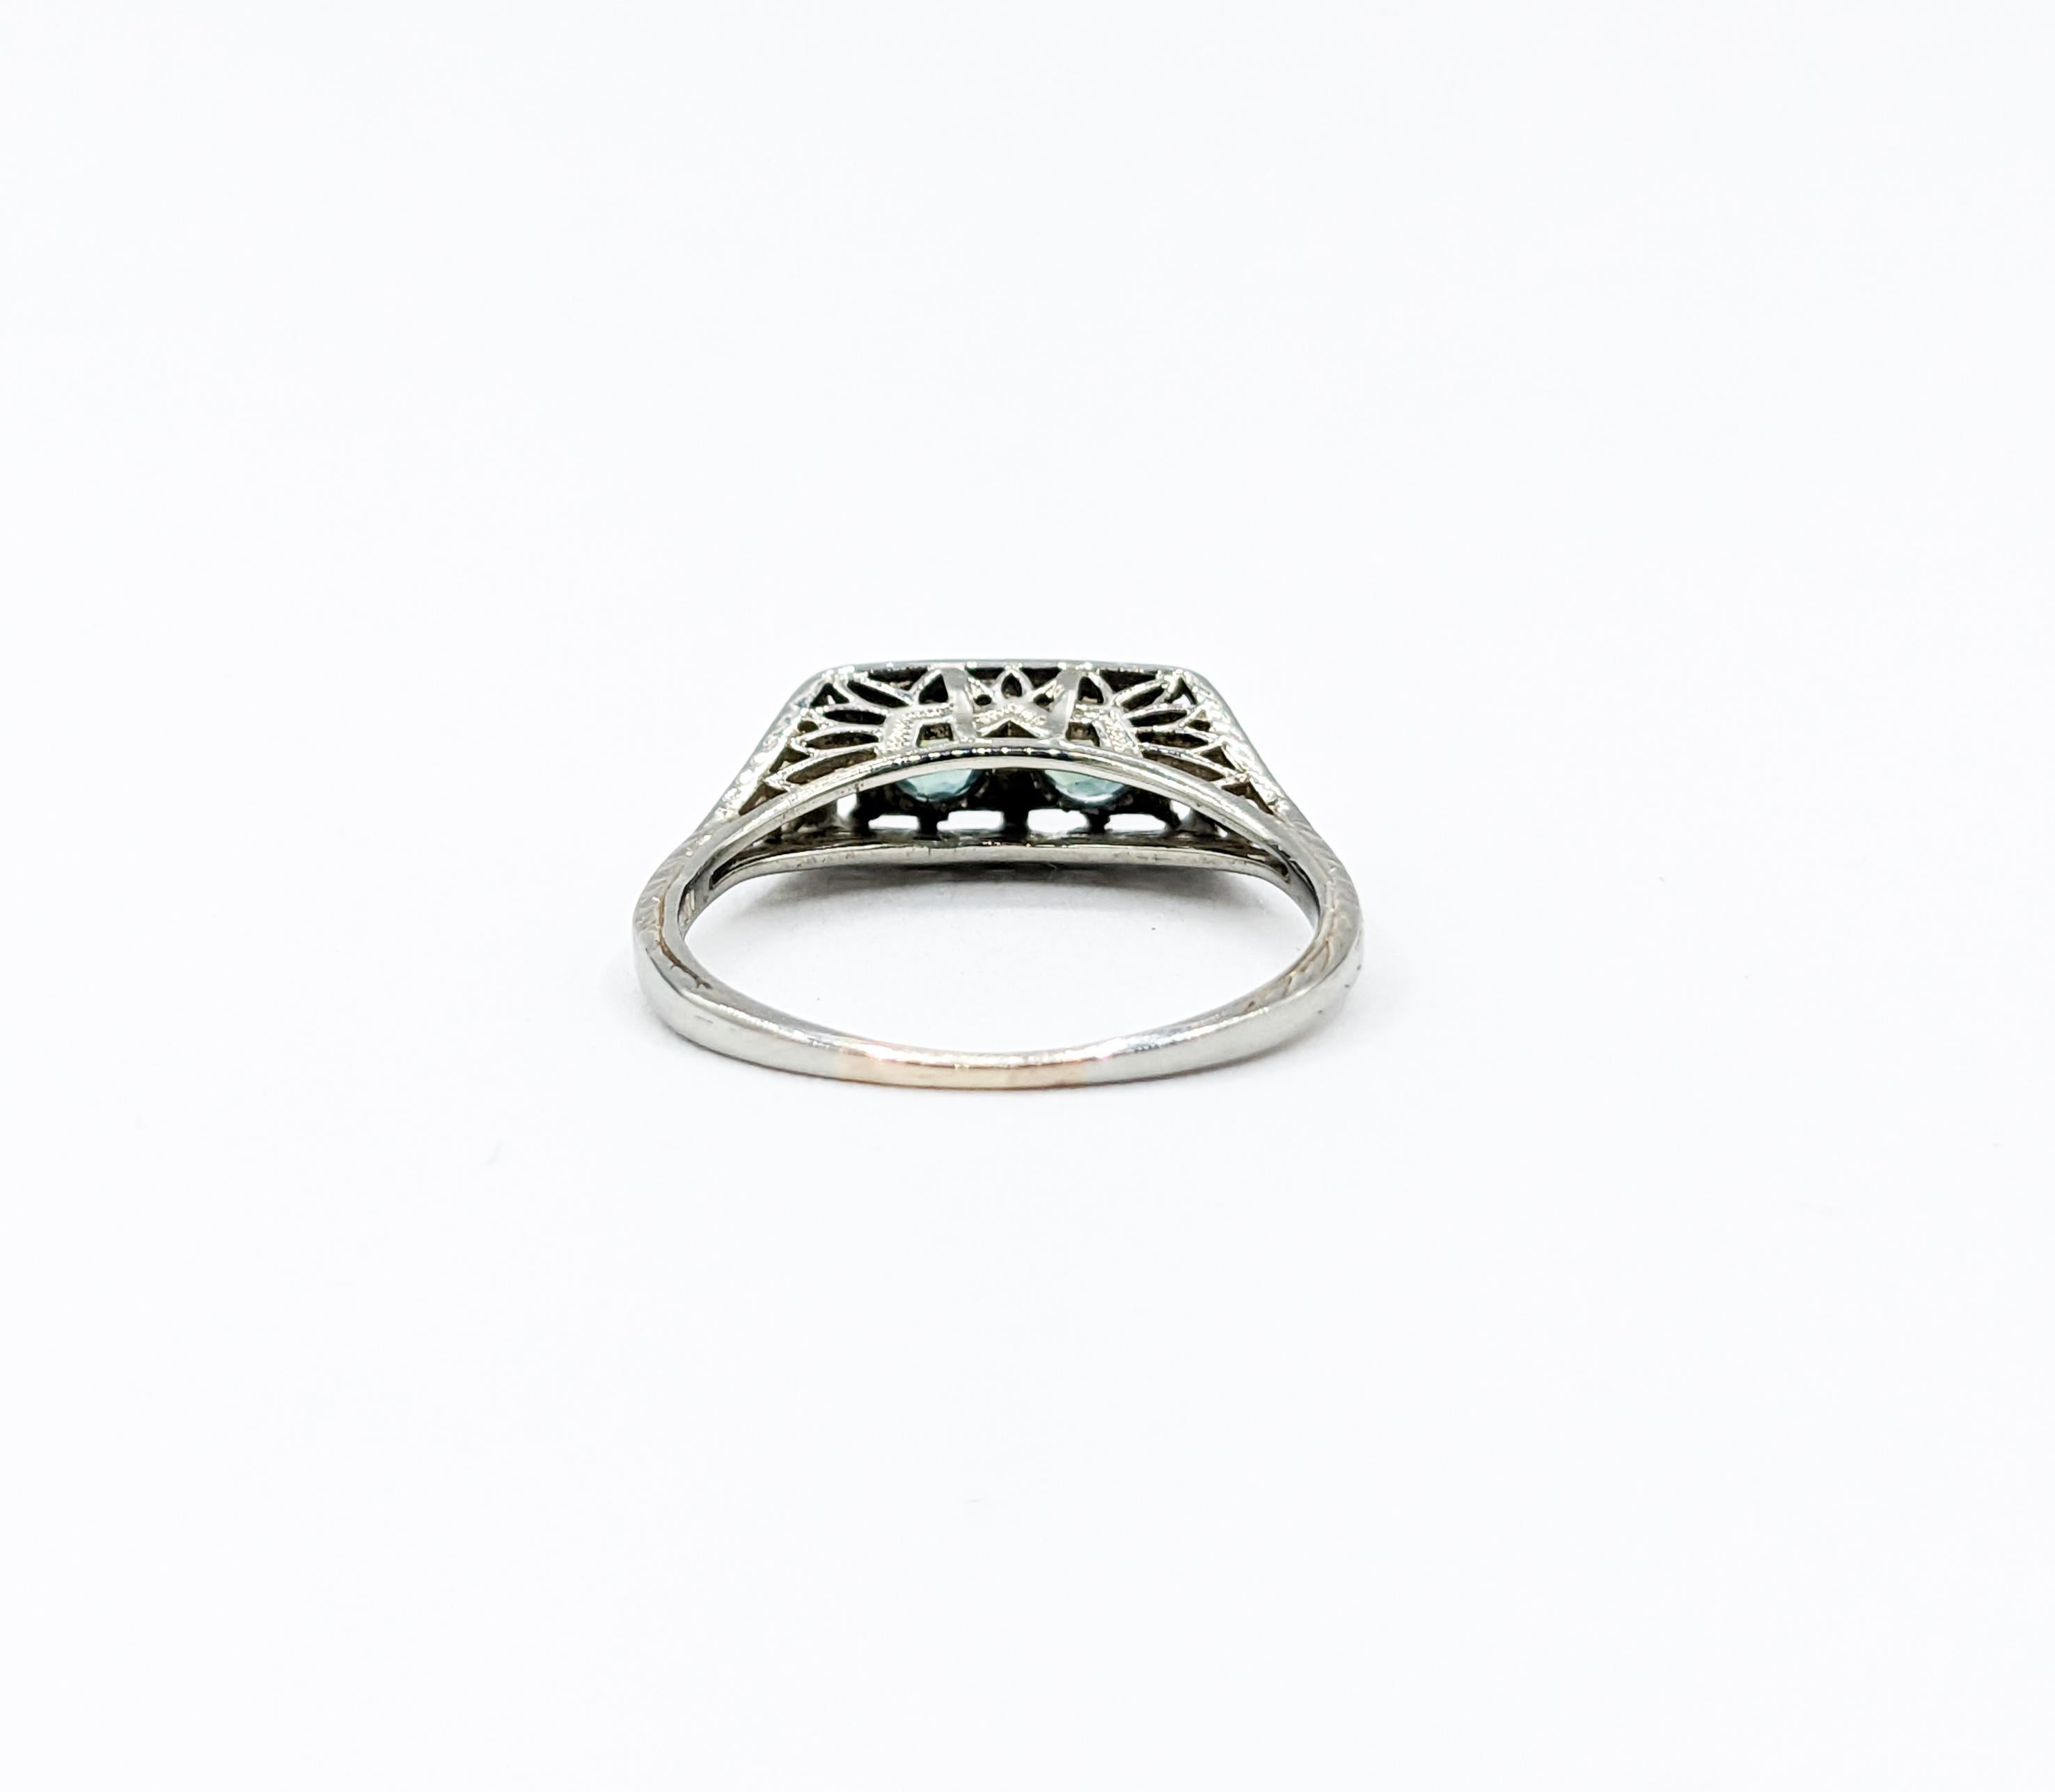 Wonderful Art Deco Color Change Alexandrite Ring in 18Kt White Gold 3